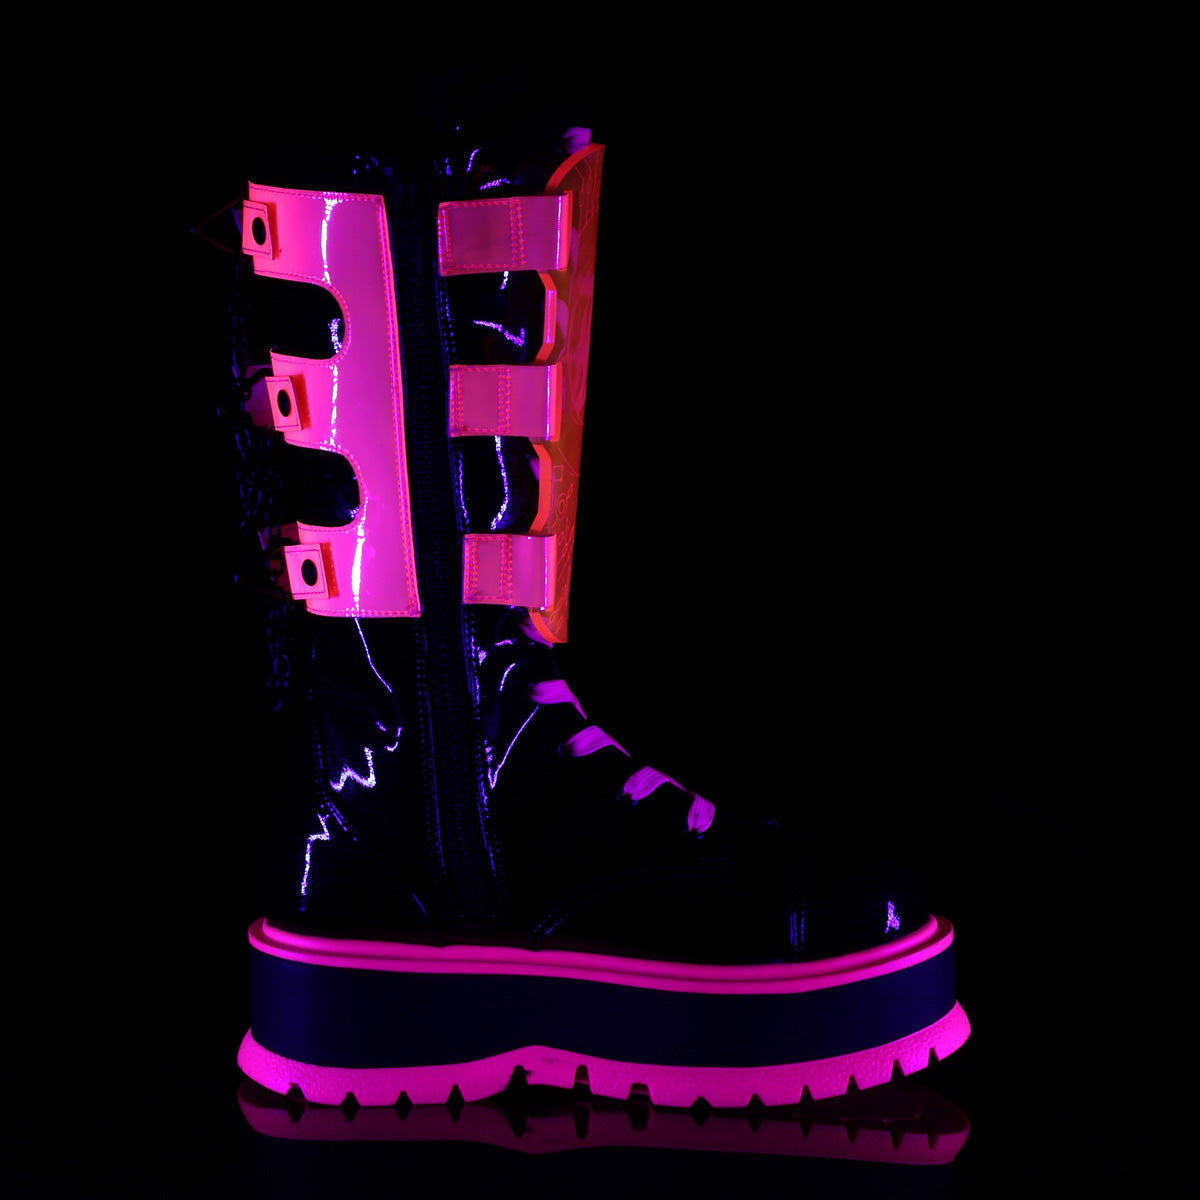 DemoniaCult  Boots SLACKER-156 Blk Patent-UV Neon Pink